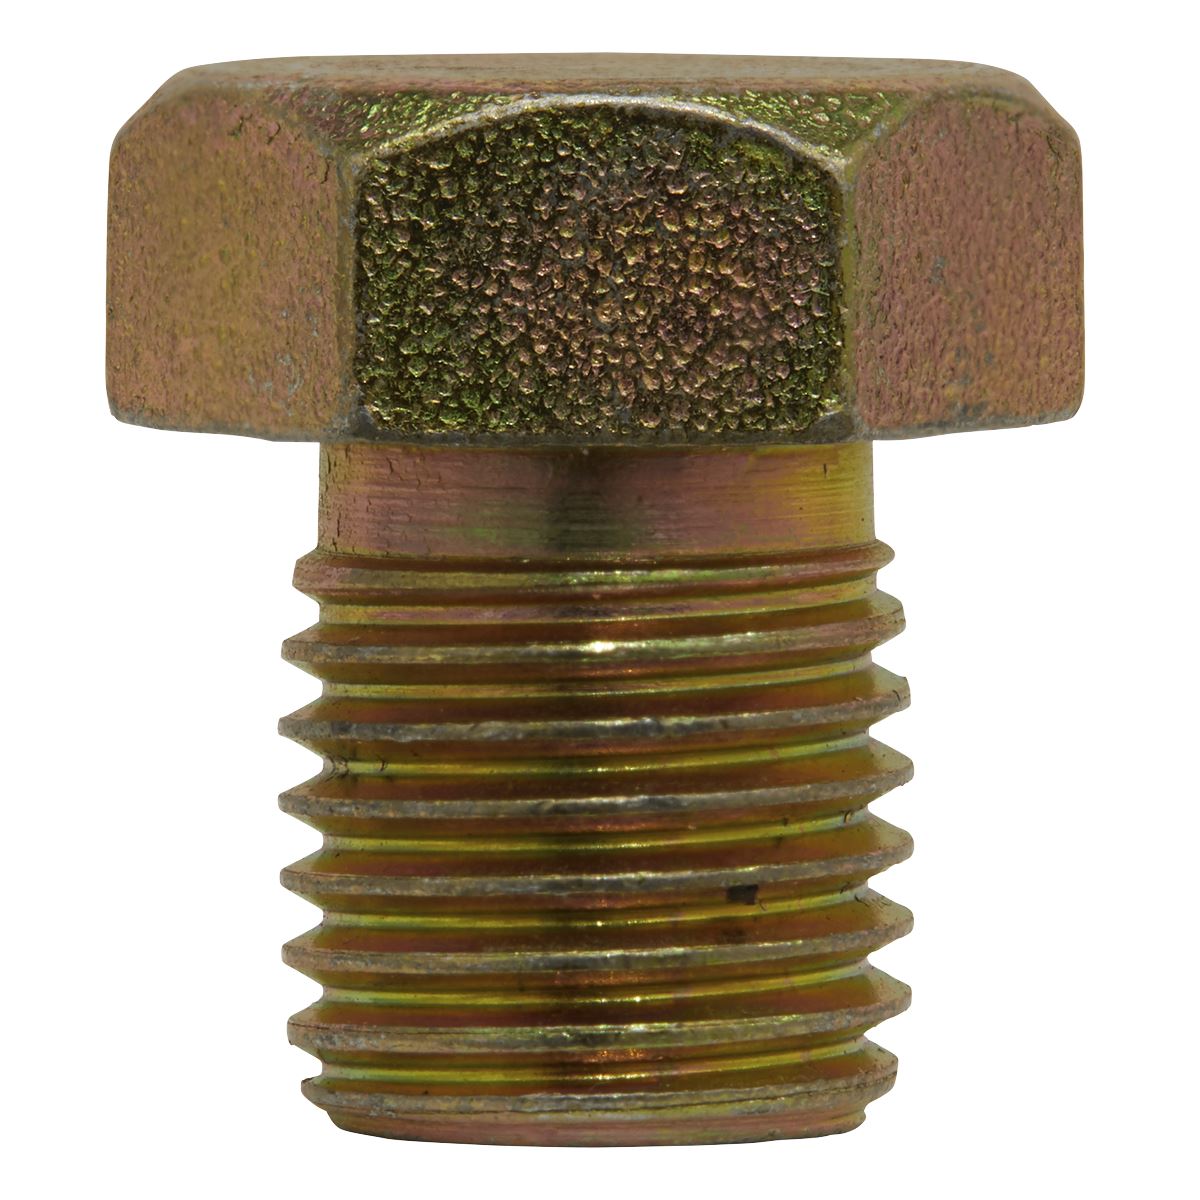 Sealey Sump Plug M13 - Pack of 5